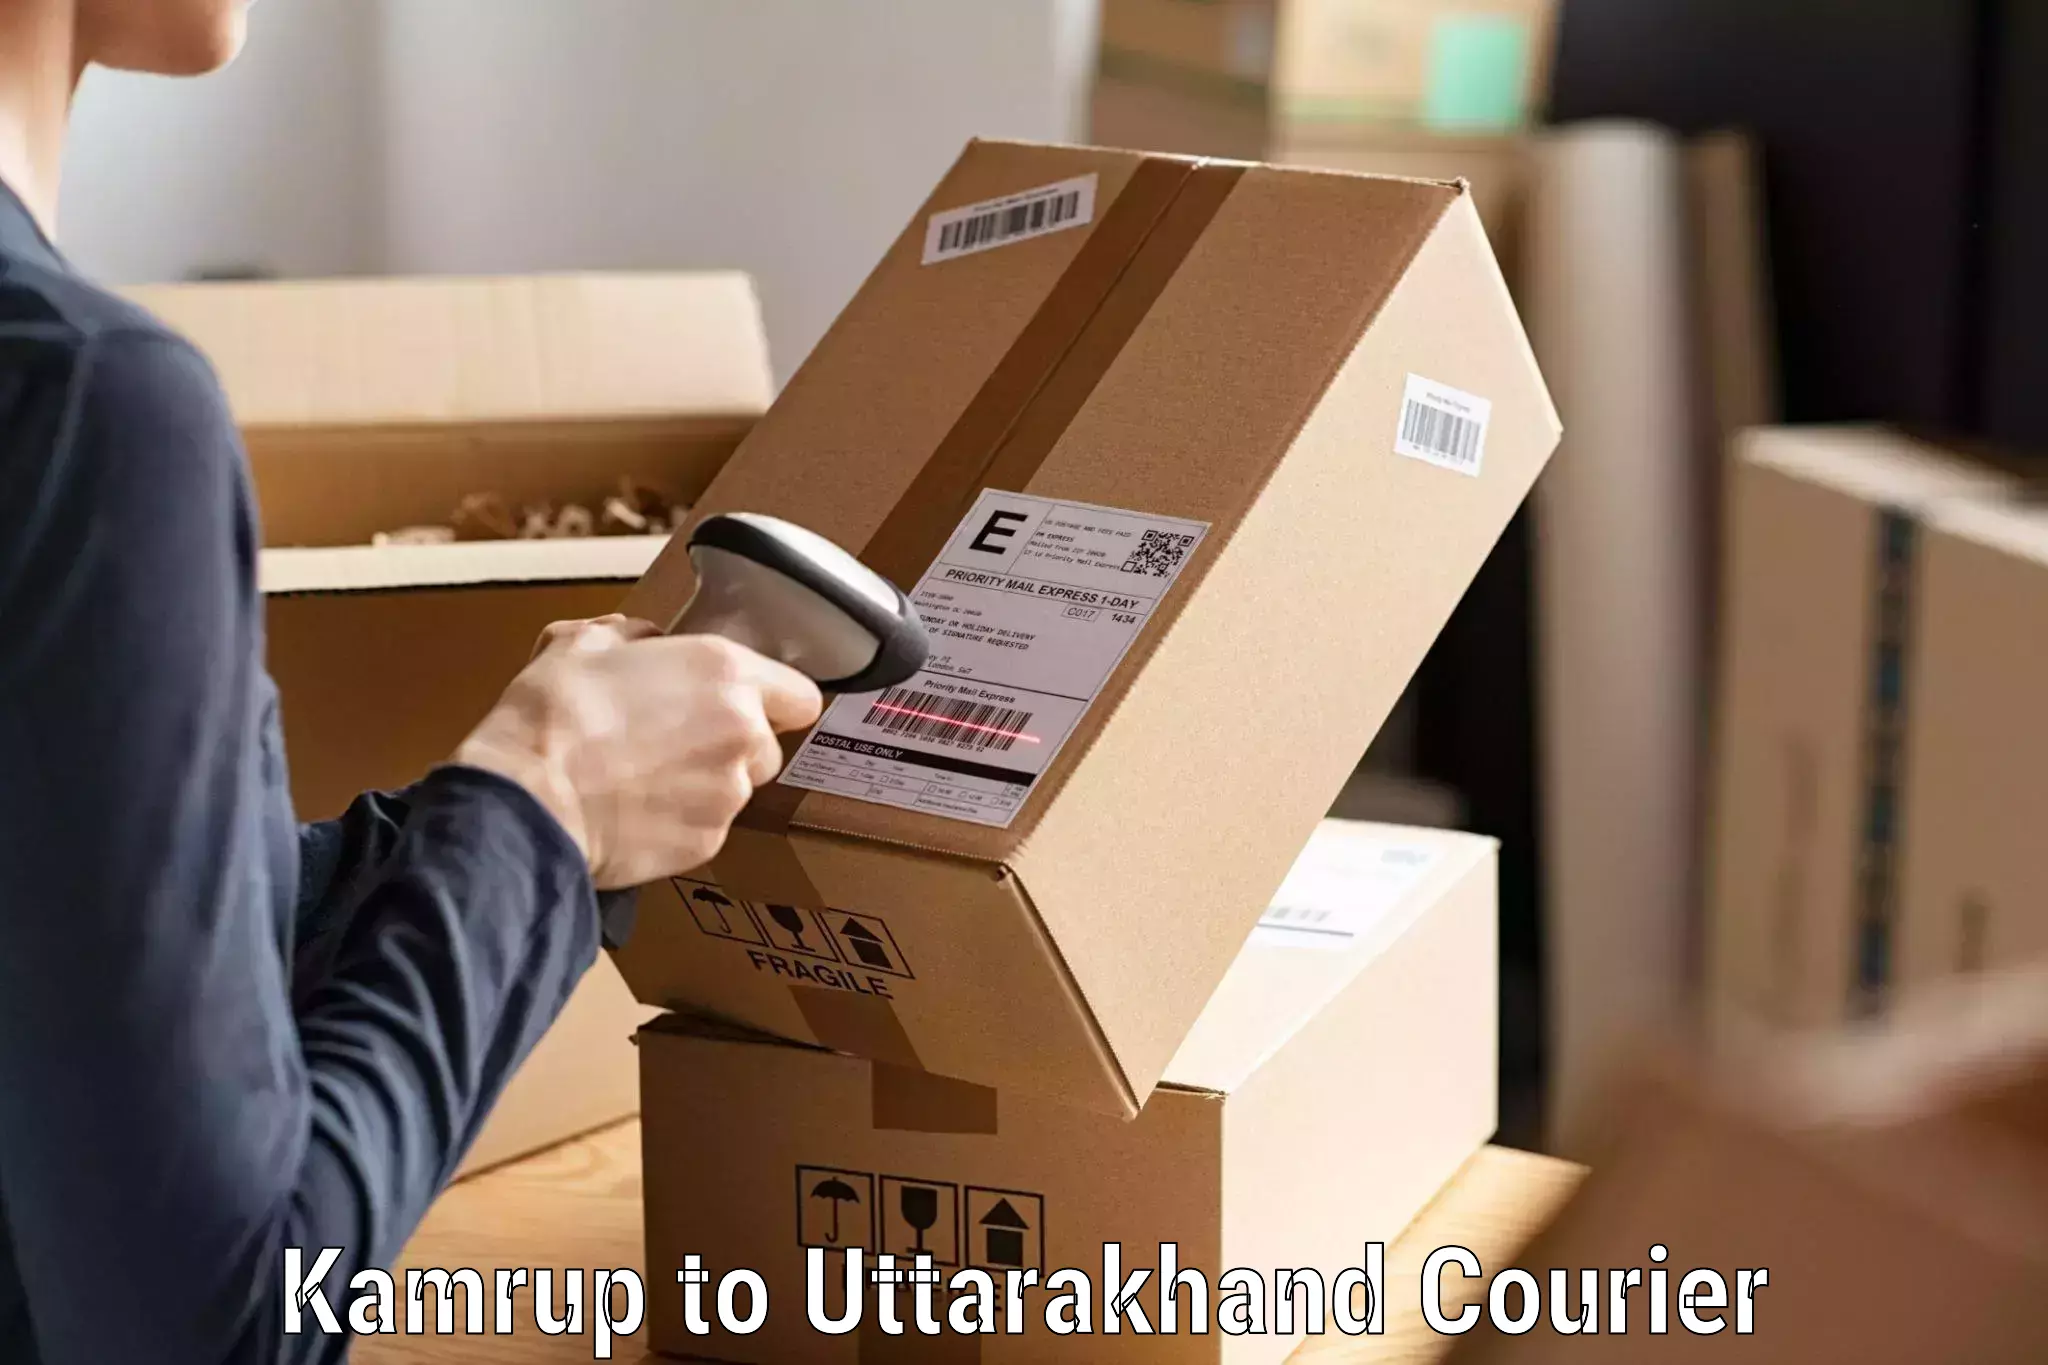 Professional parcel services Kamrup to Haldwani